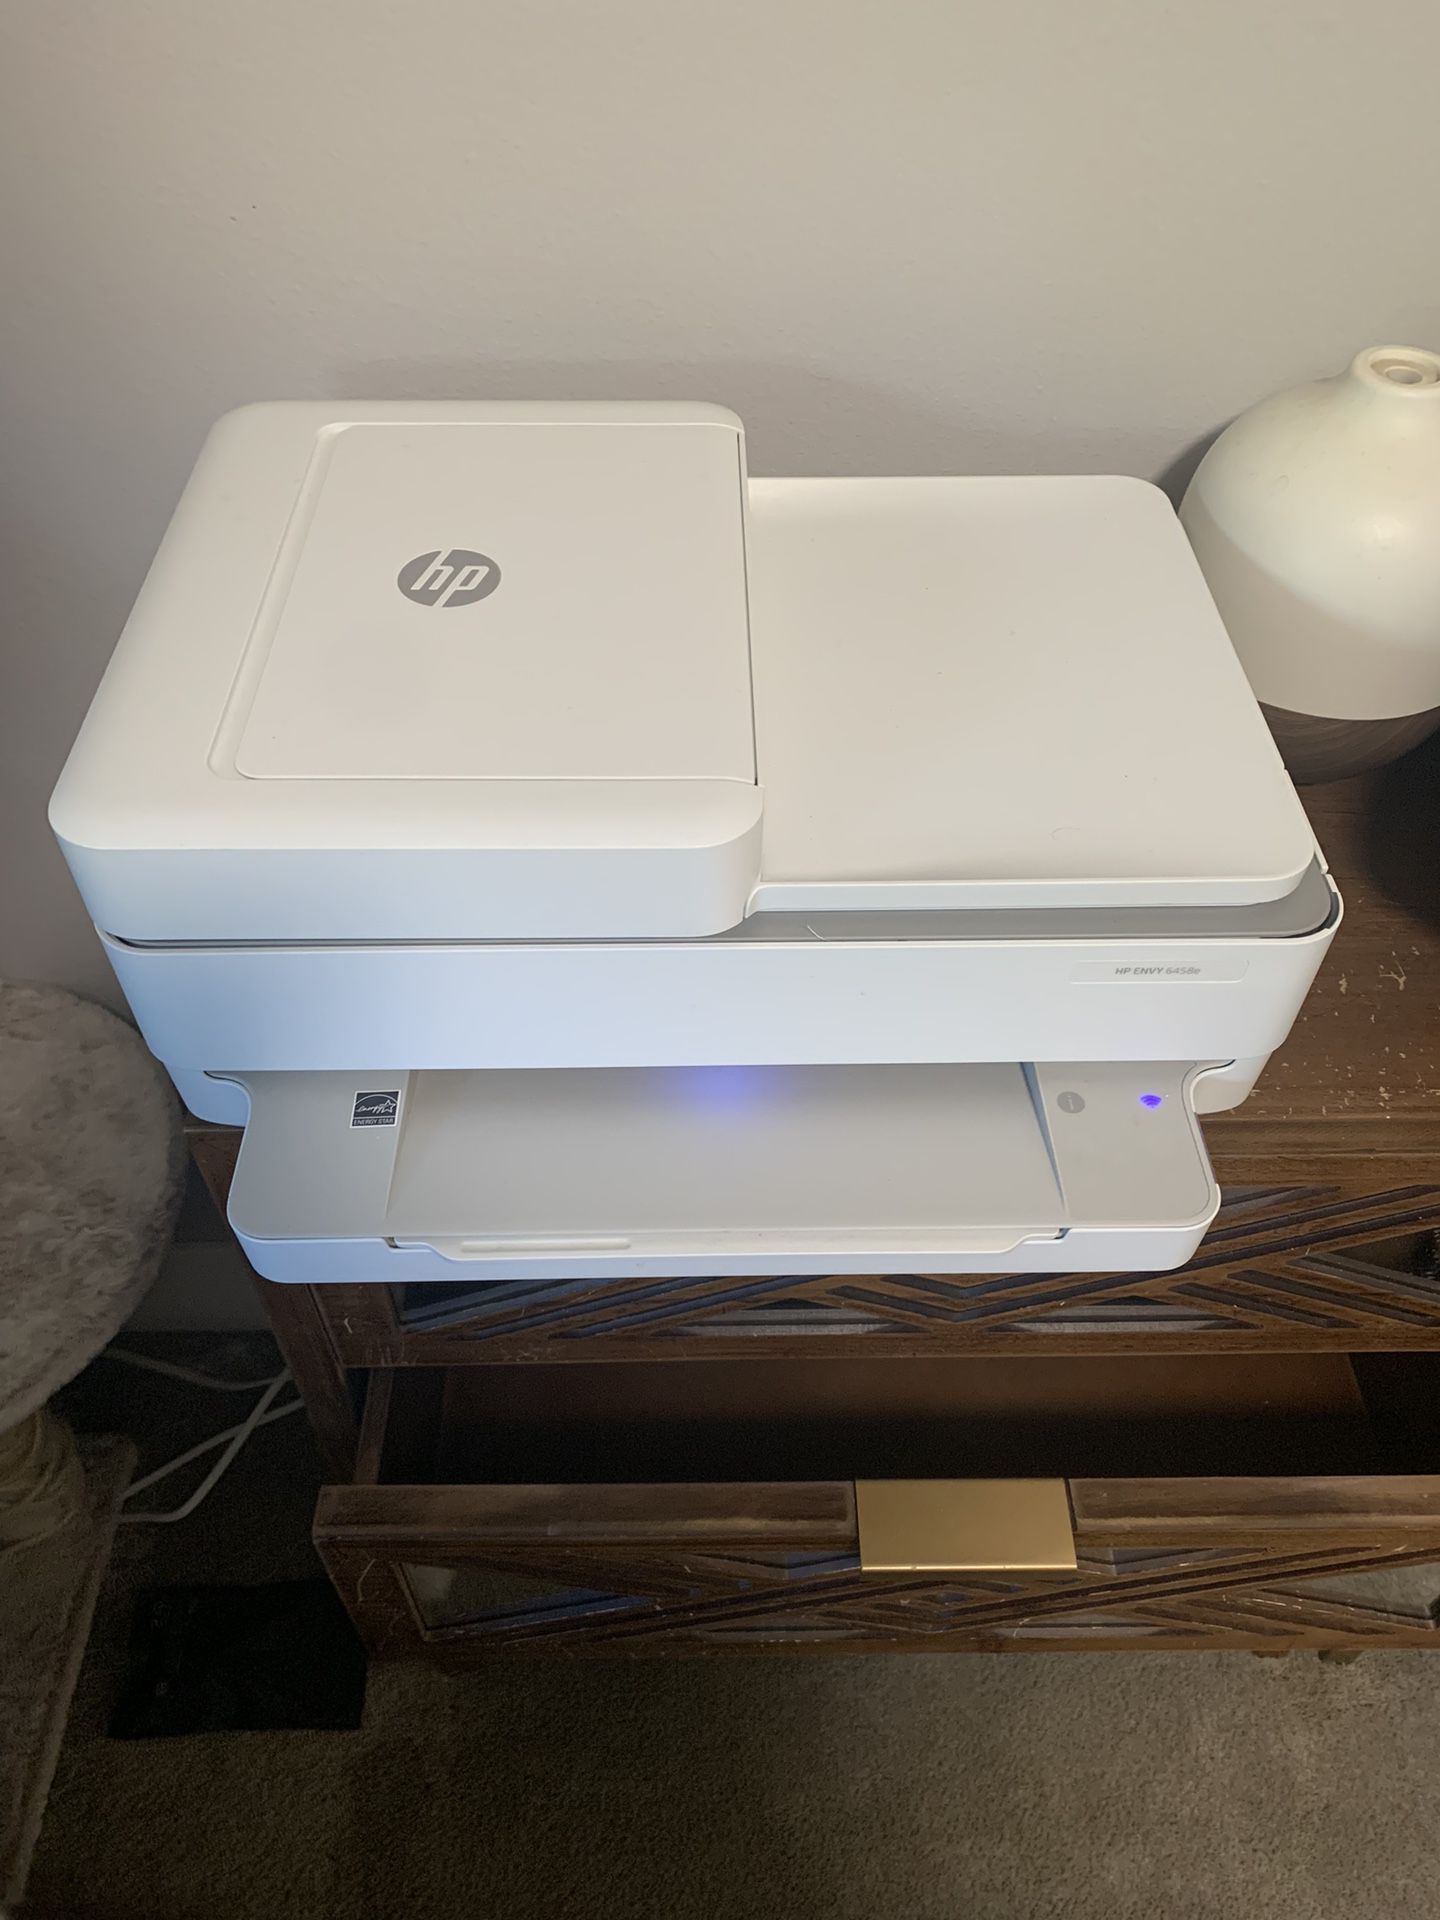 HP Envy Printer